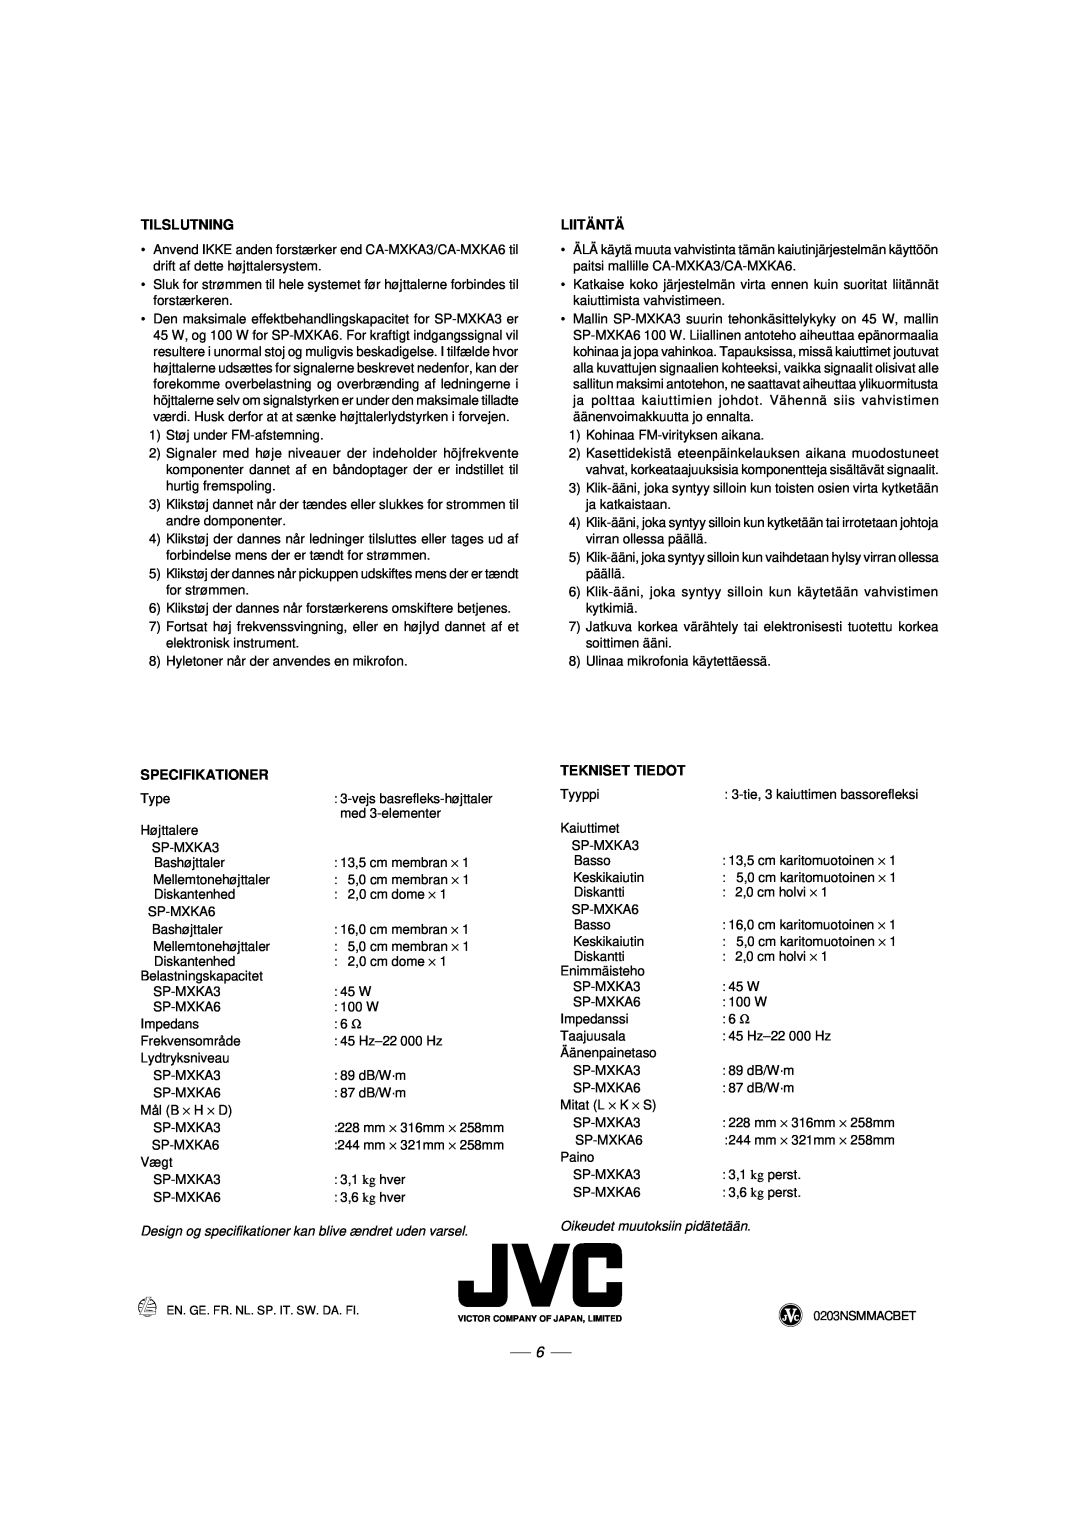 JVC LVT1014-003A, CA-MXKA6, 0303NYMCREBETEN manual Tilslutning, Liitäntä, Specifikationer, Tekniset Tiedot 